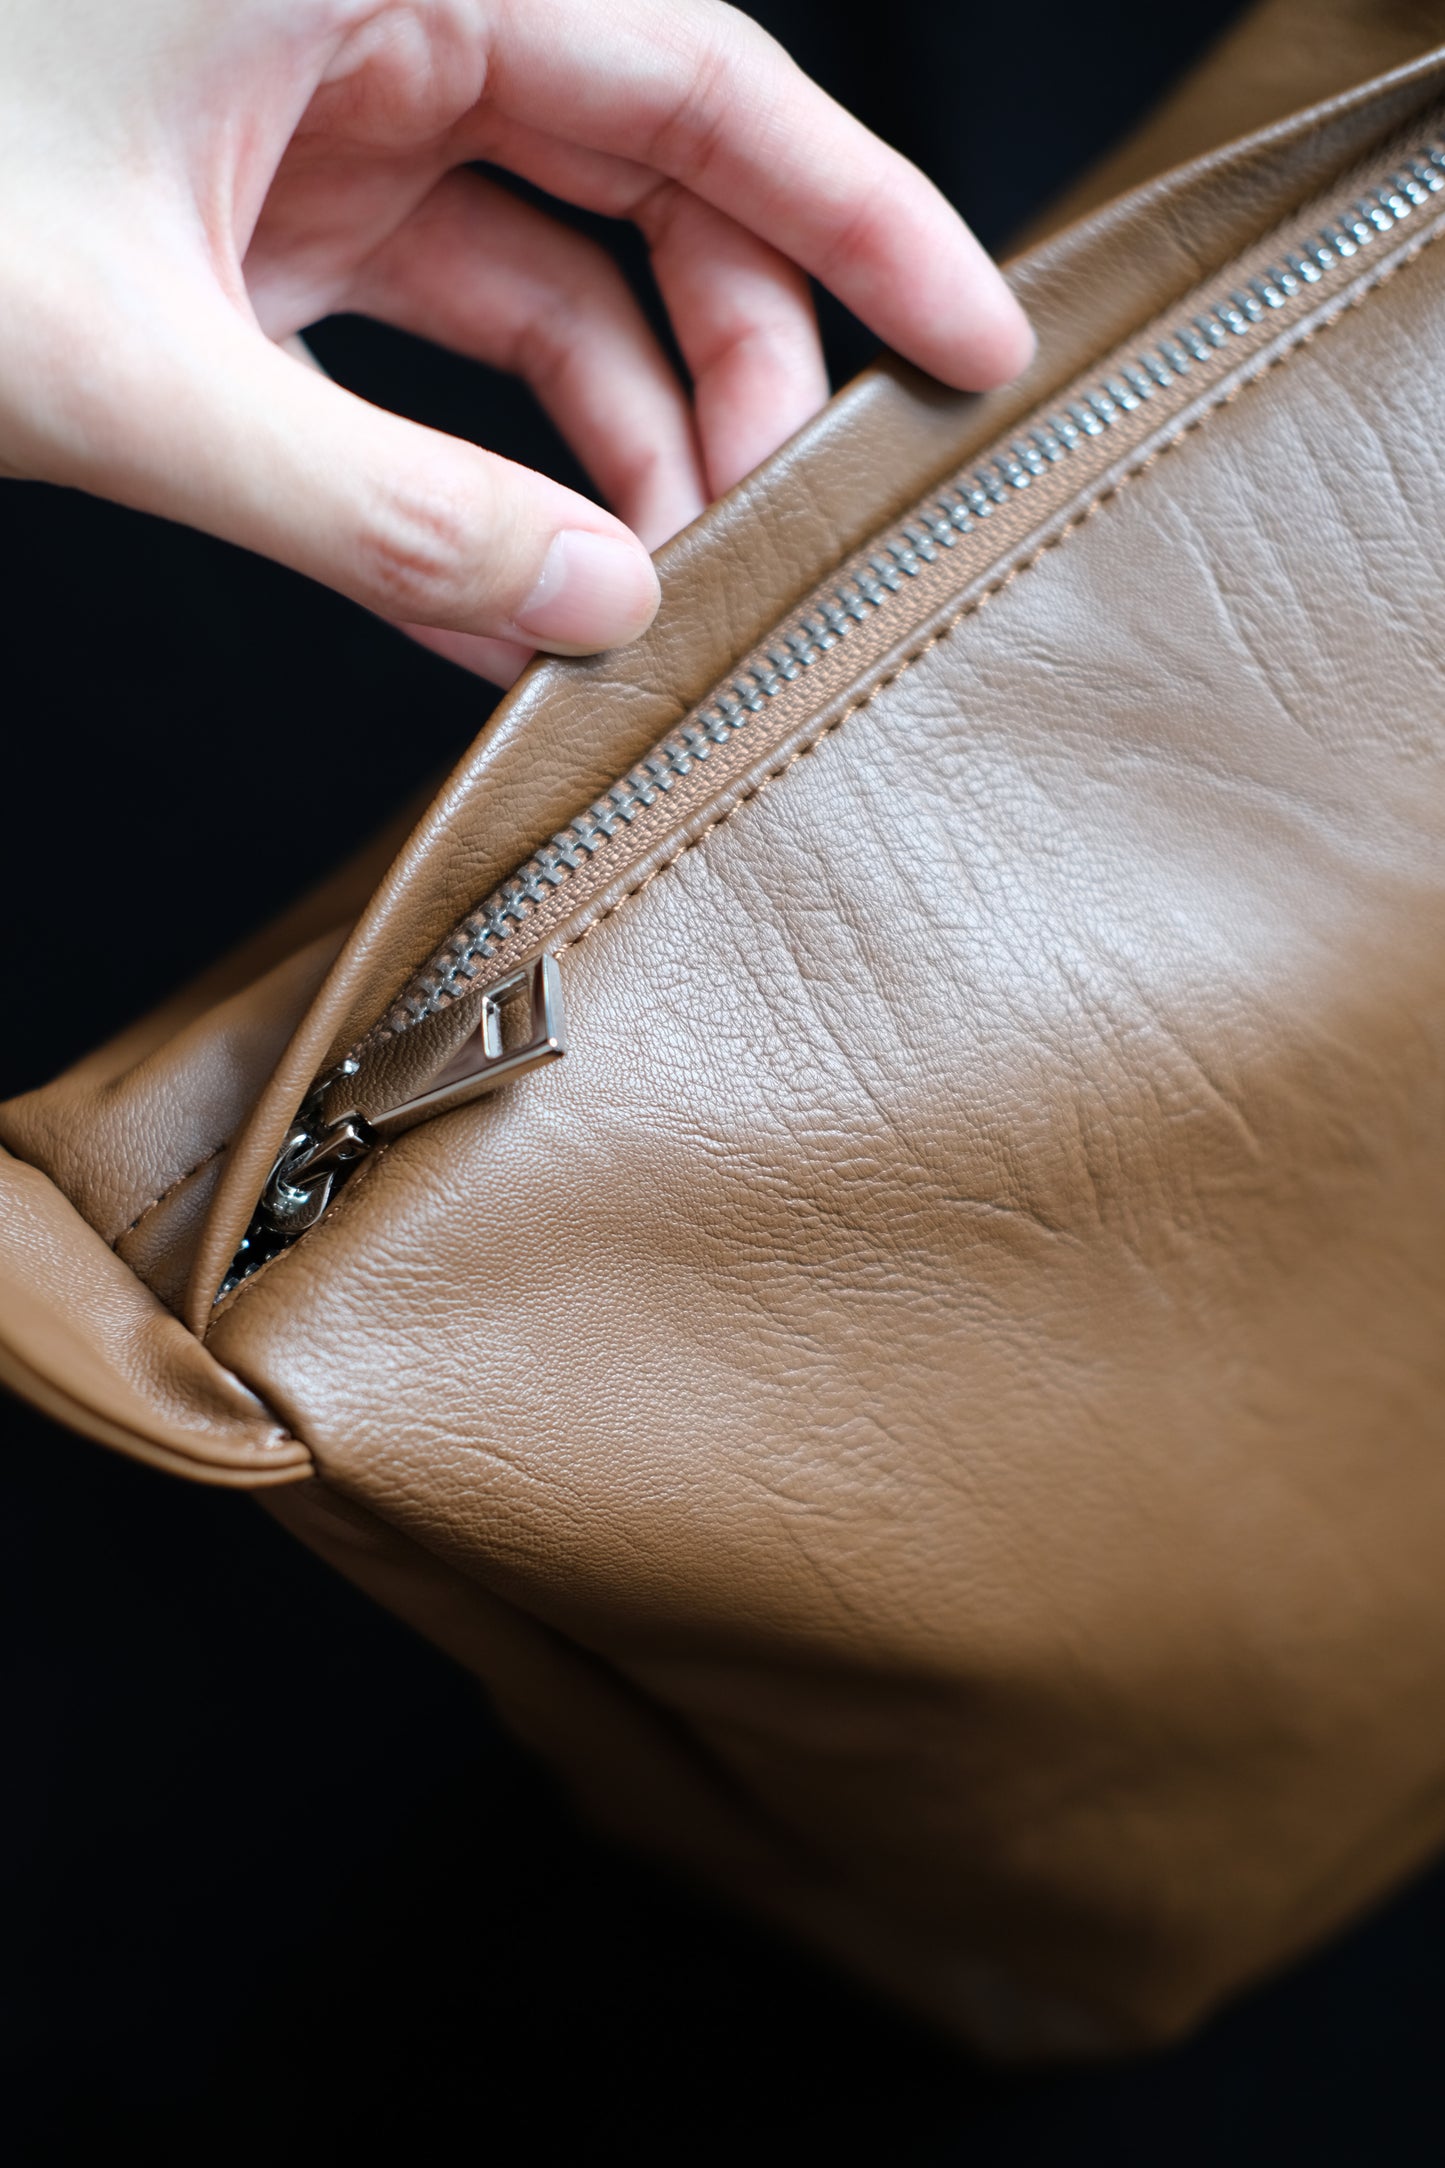 Premium soft leather shoulder bag in brown